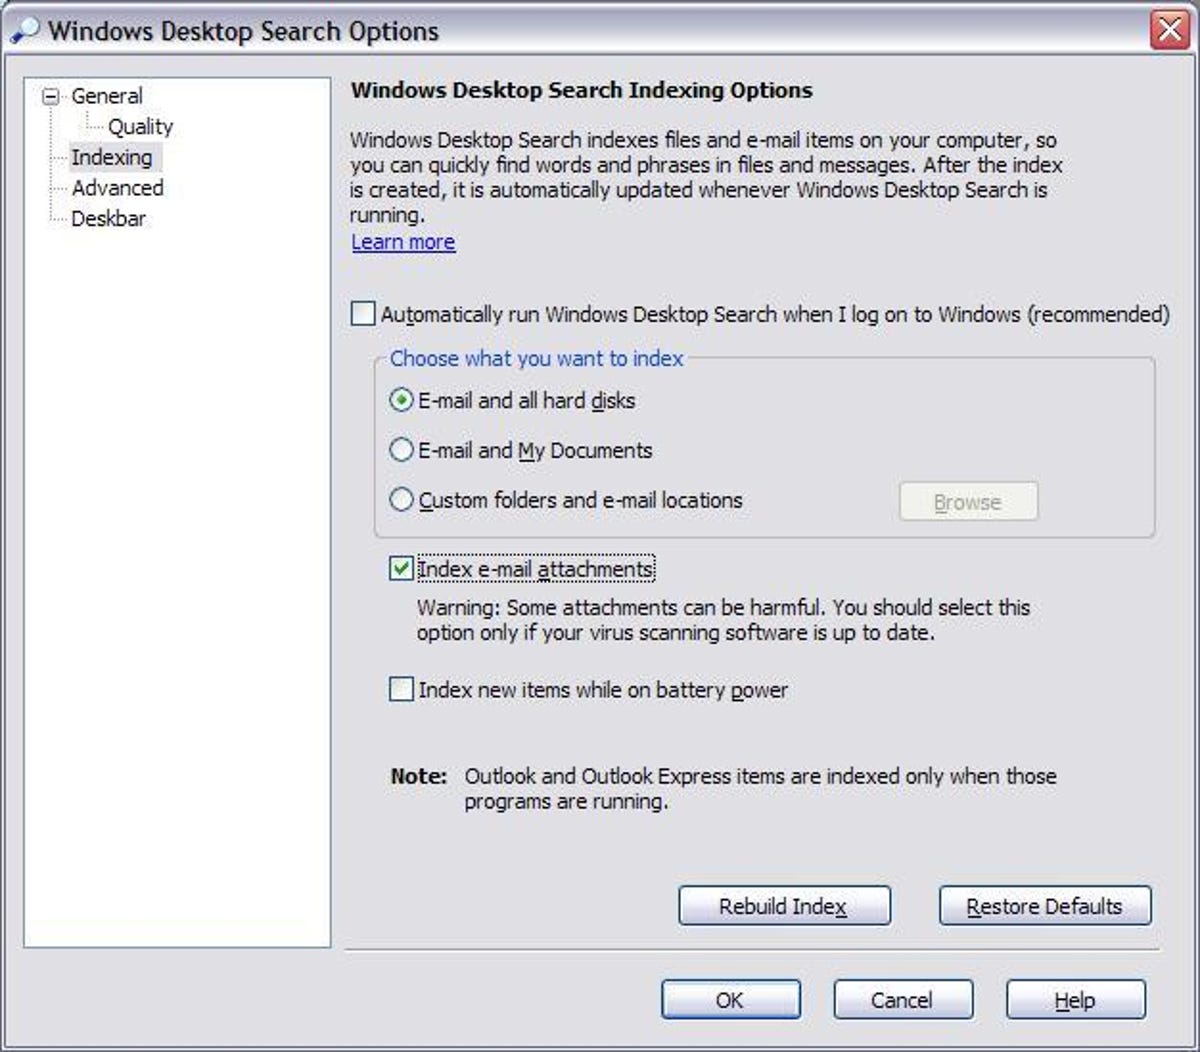 Windows Desktop Search's Indexing Options dialog box